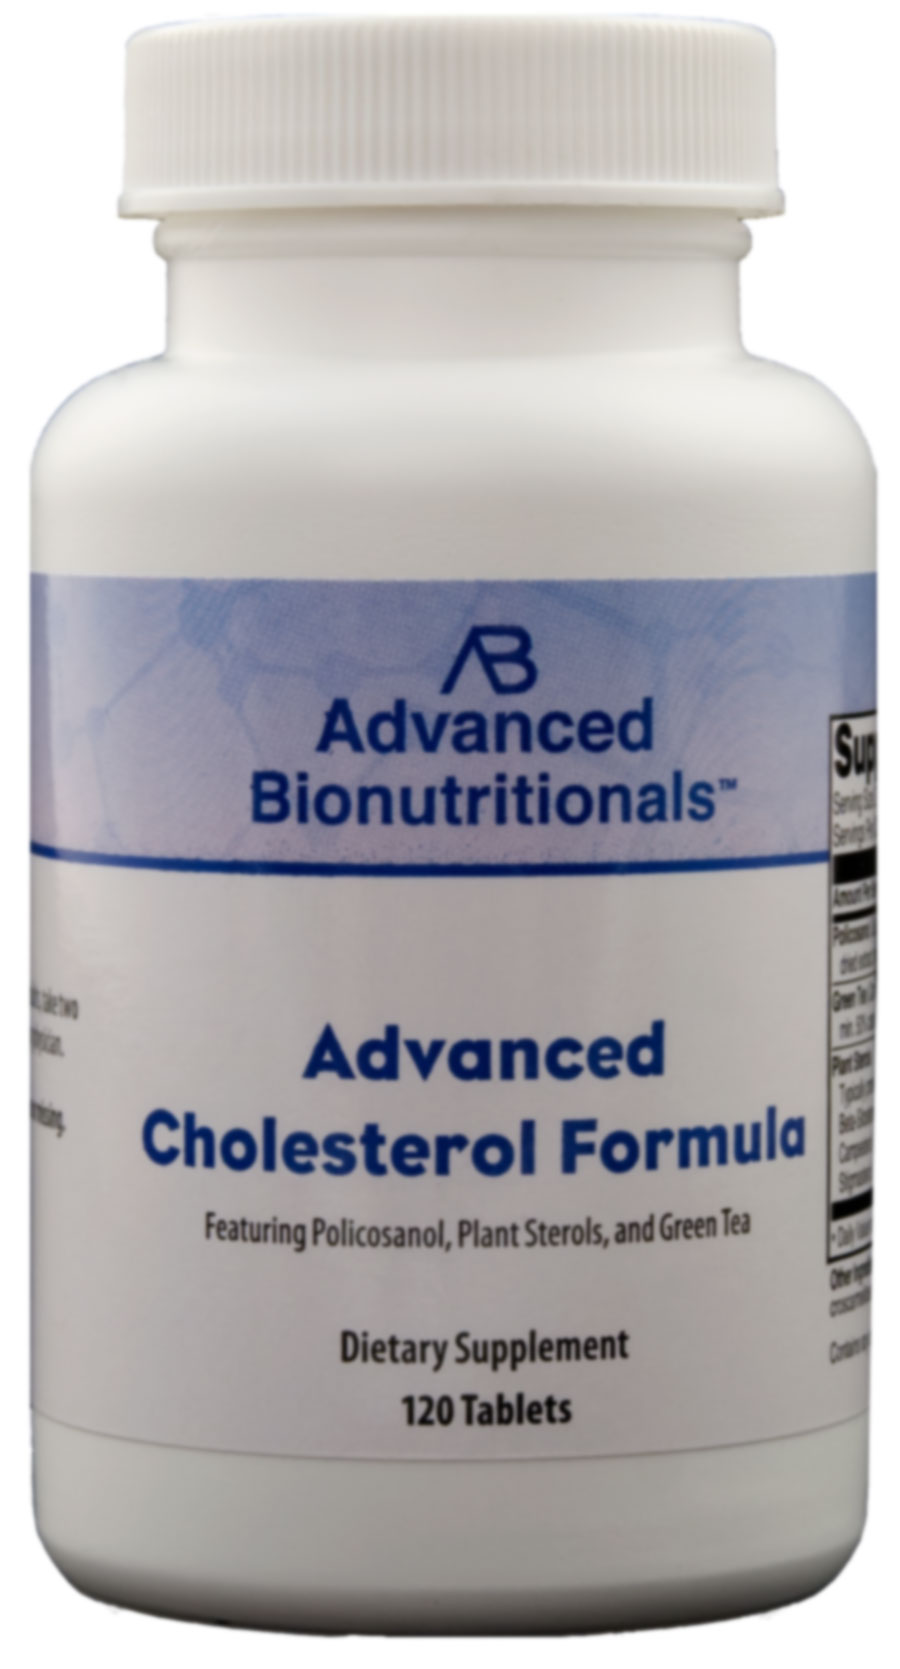 Advanced Cholesterol Formula